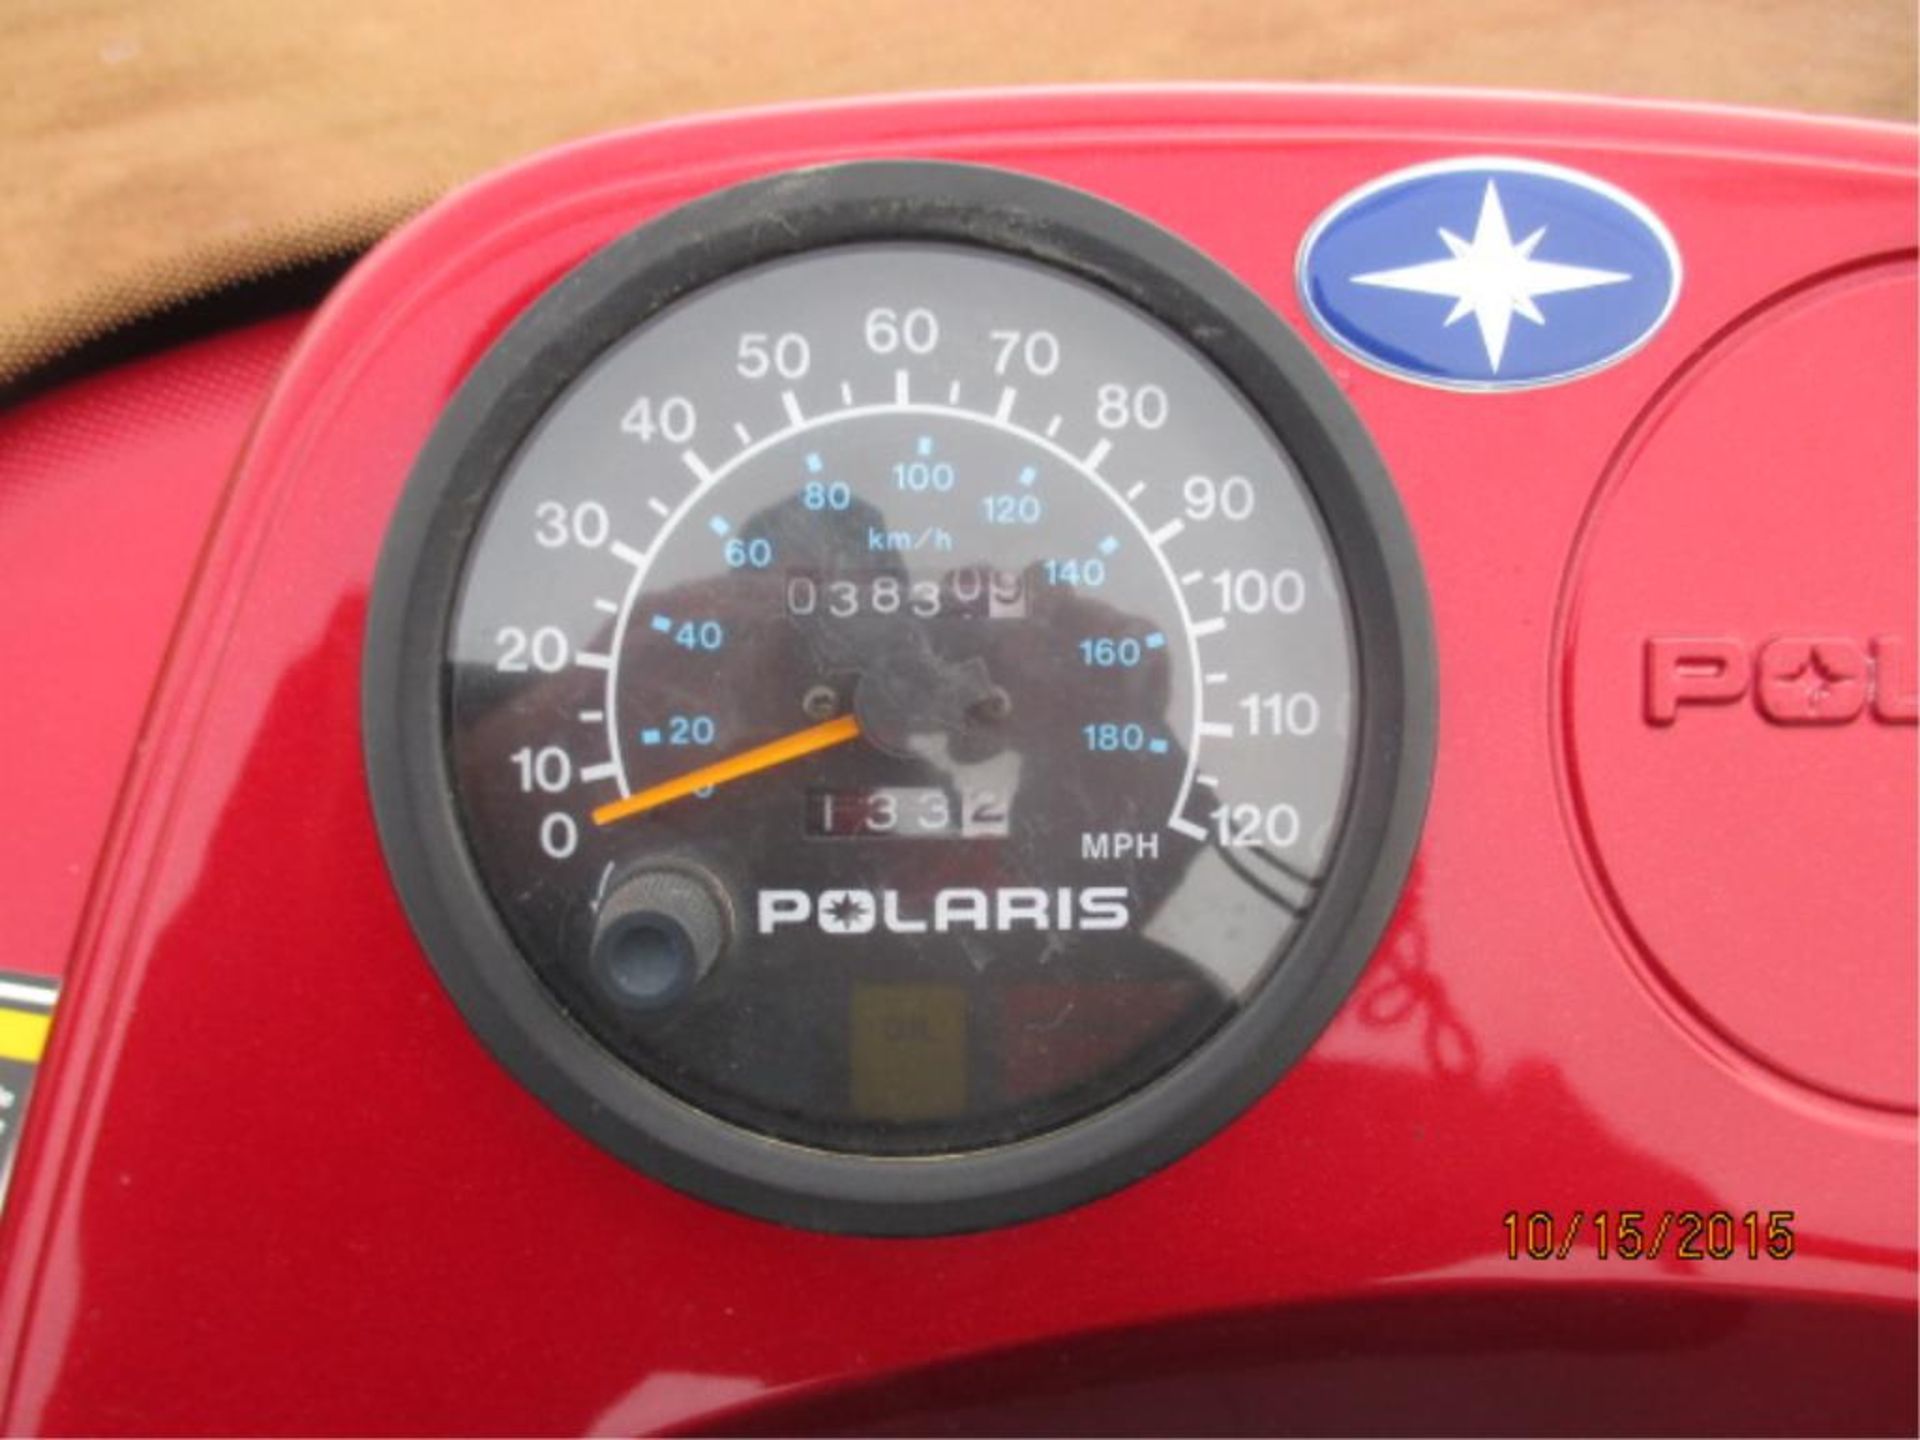 340 Polaris Touring - Image 2 of 2